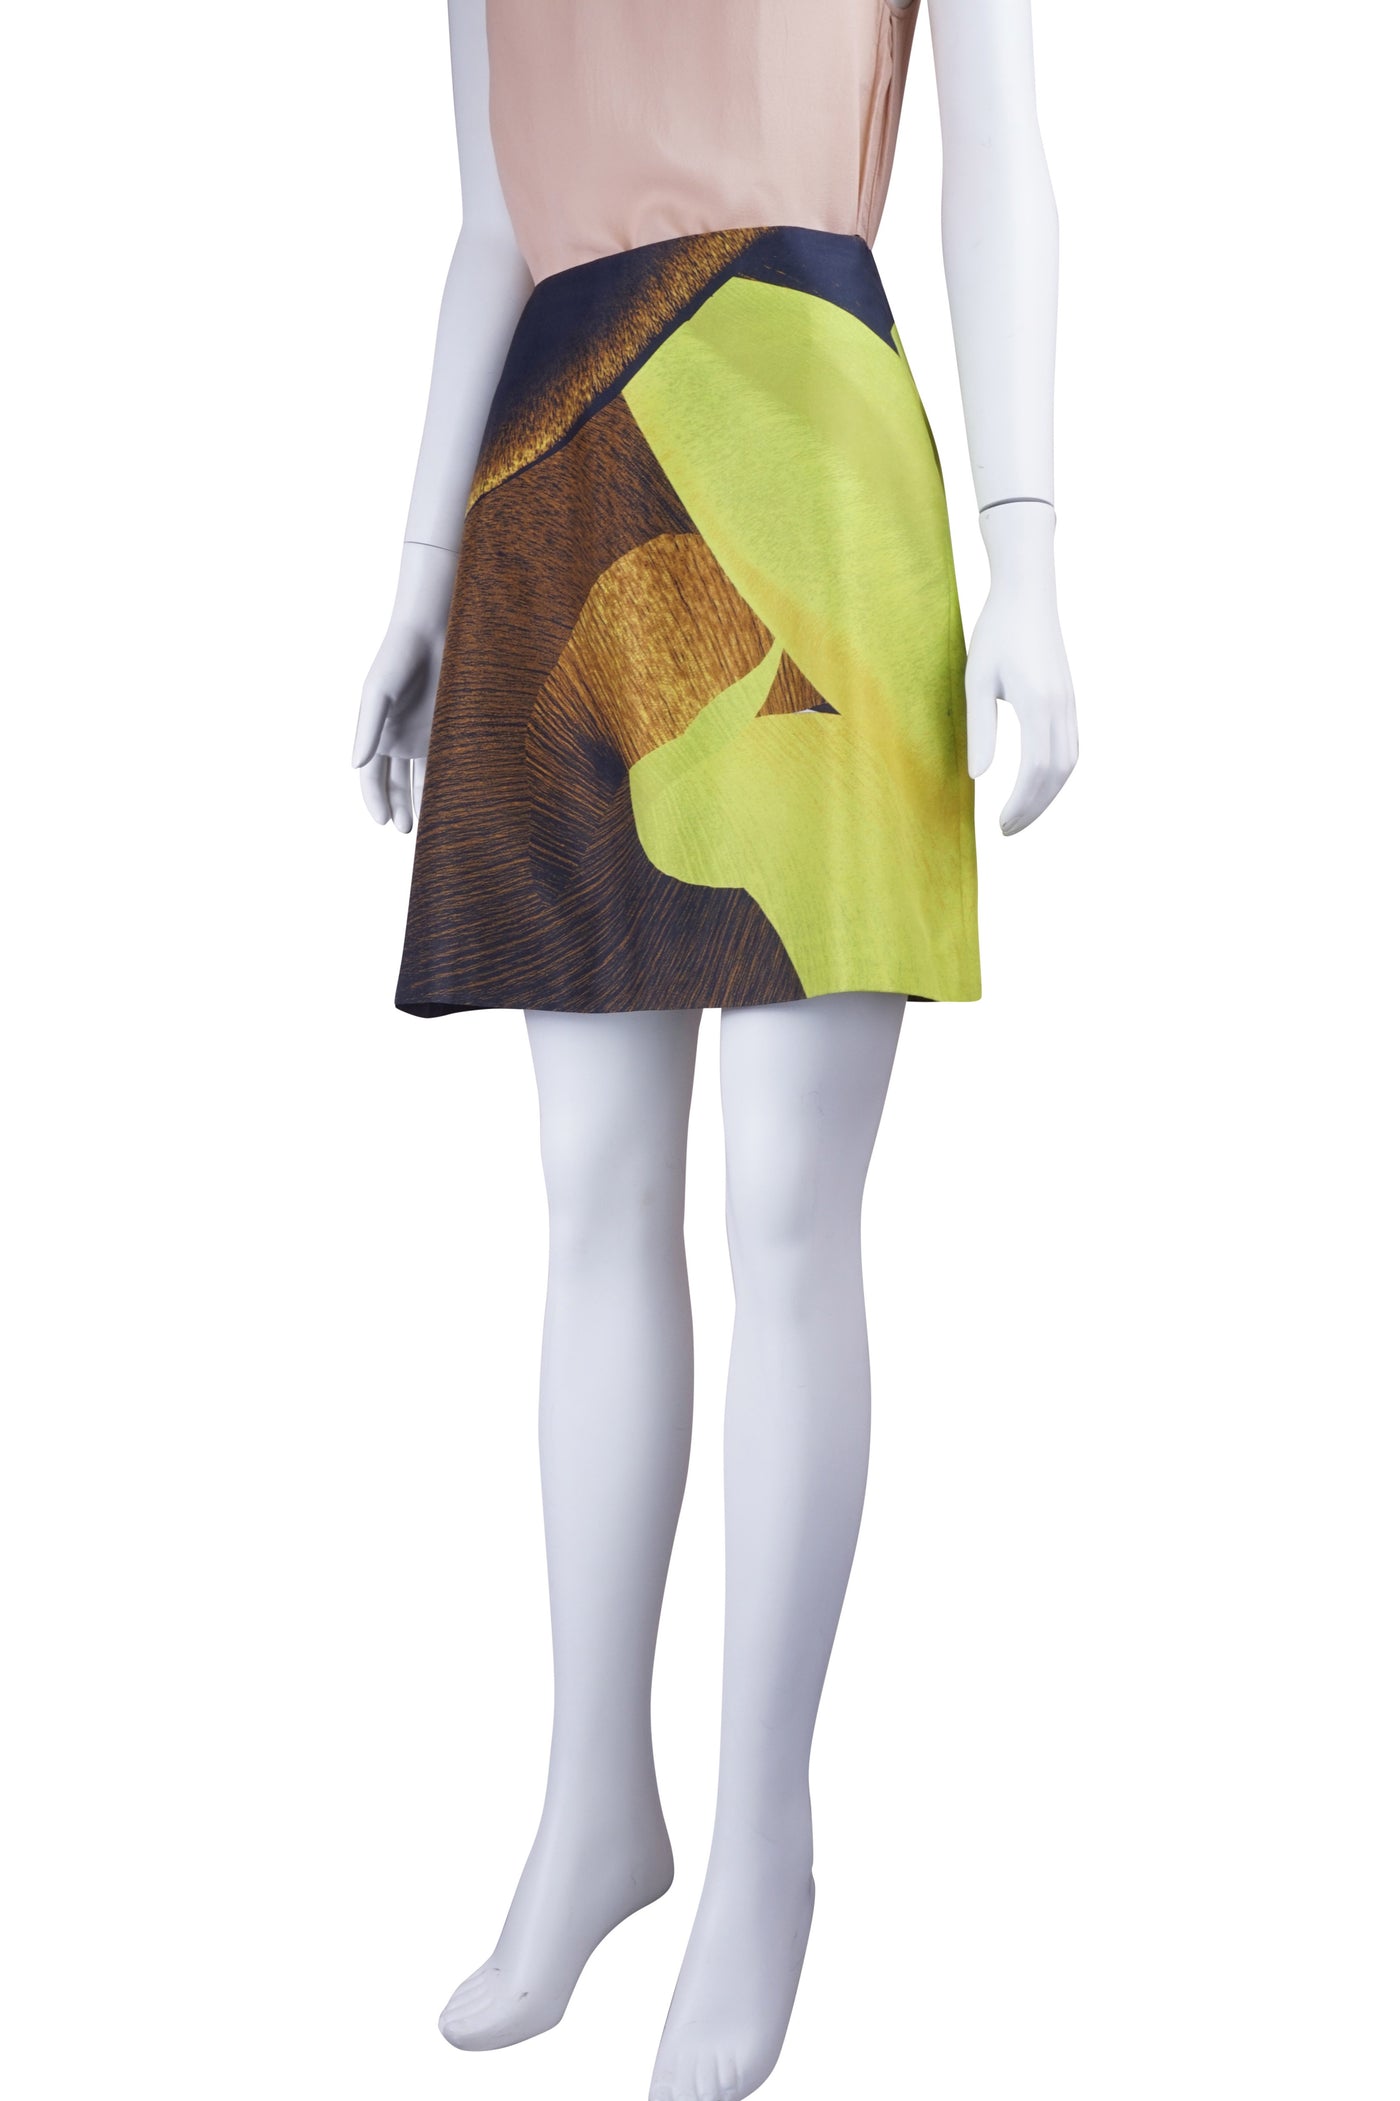 Lime digital print skirt